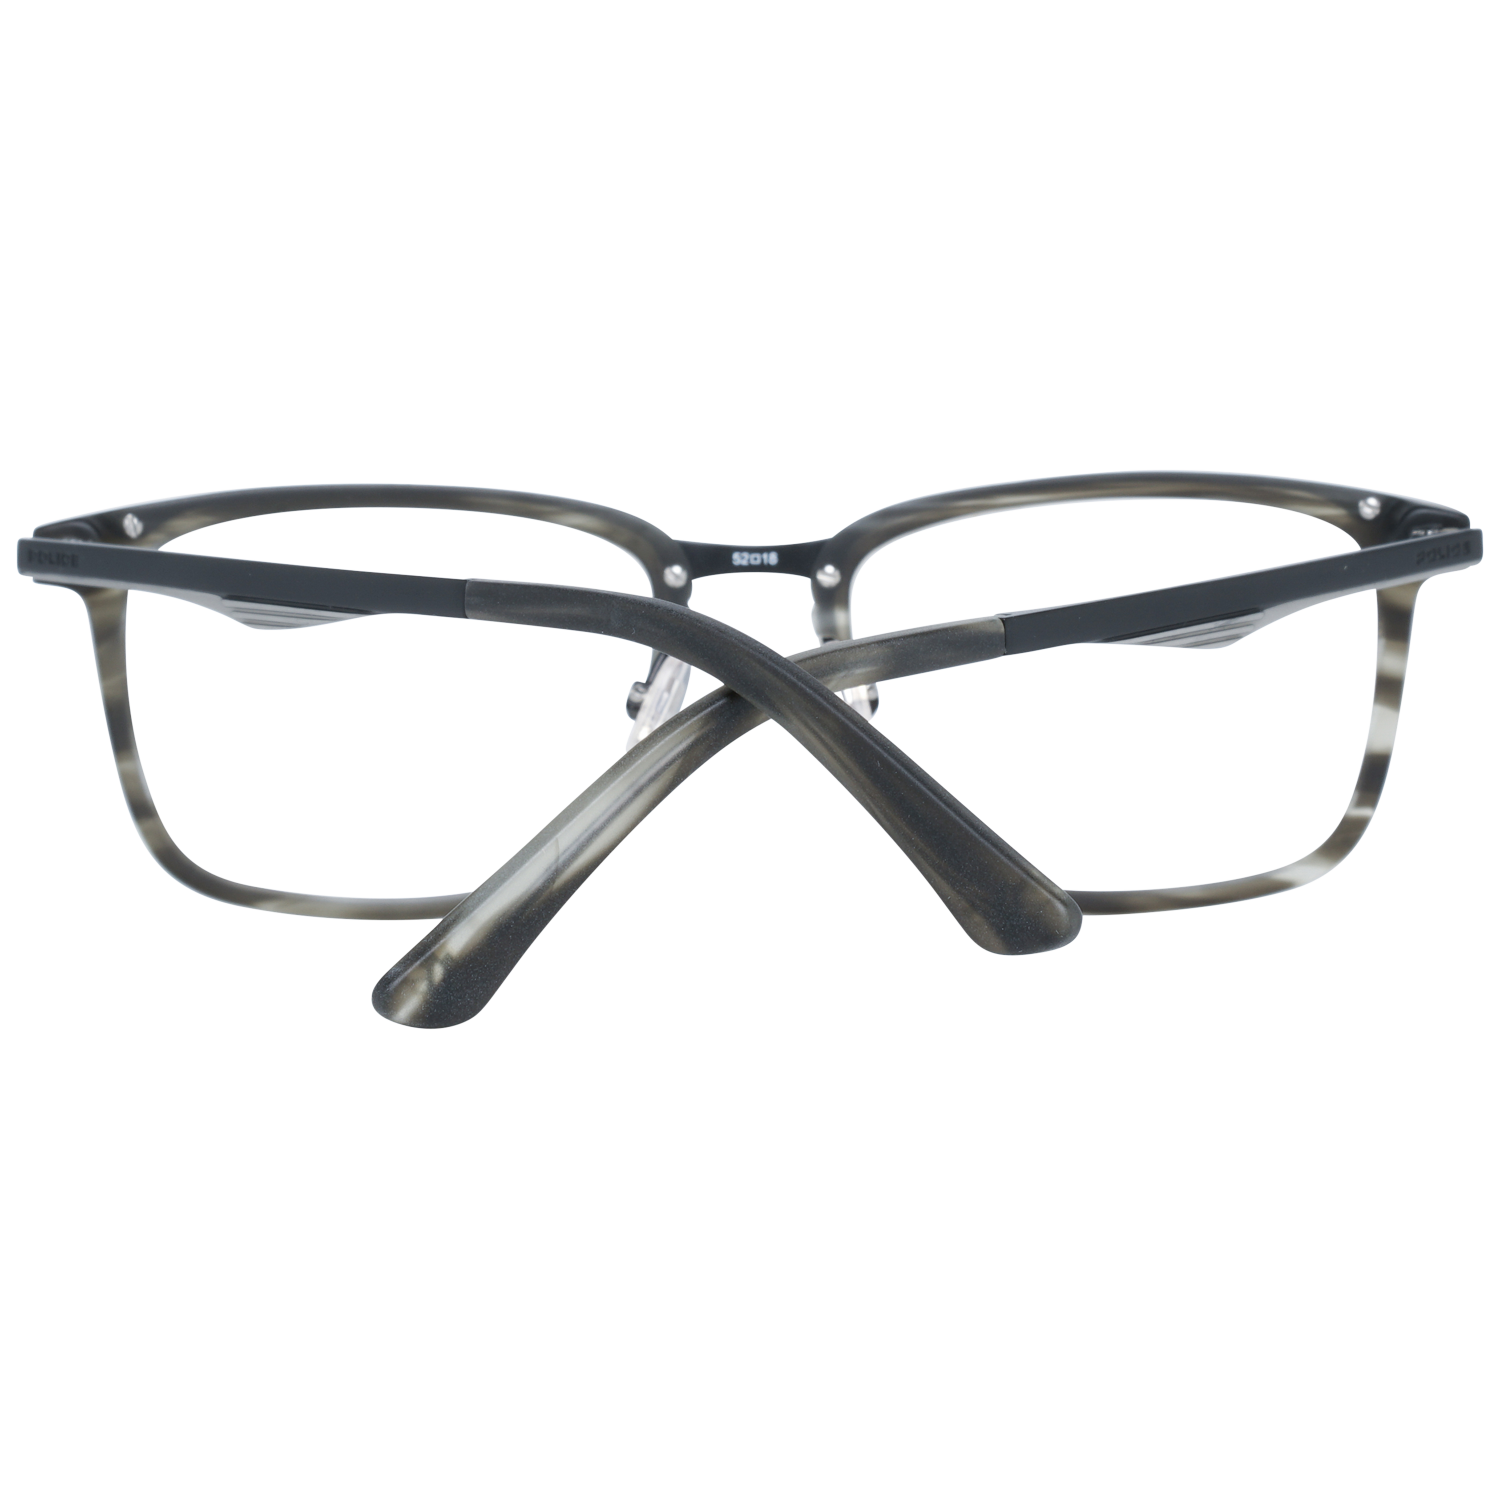 Police Frames Police Glasses Frames VPL684 4ATM 52 Eyeglasses Eyewear UK USA Australia 